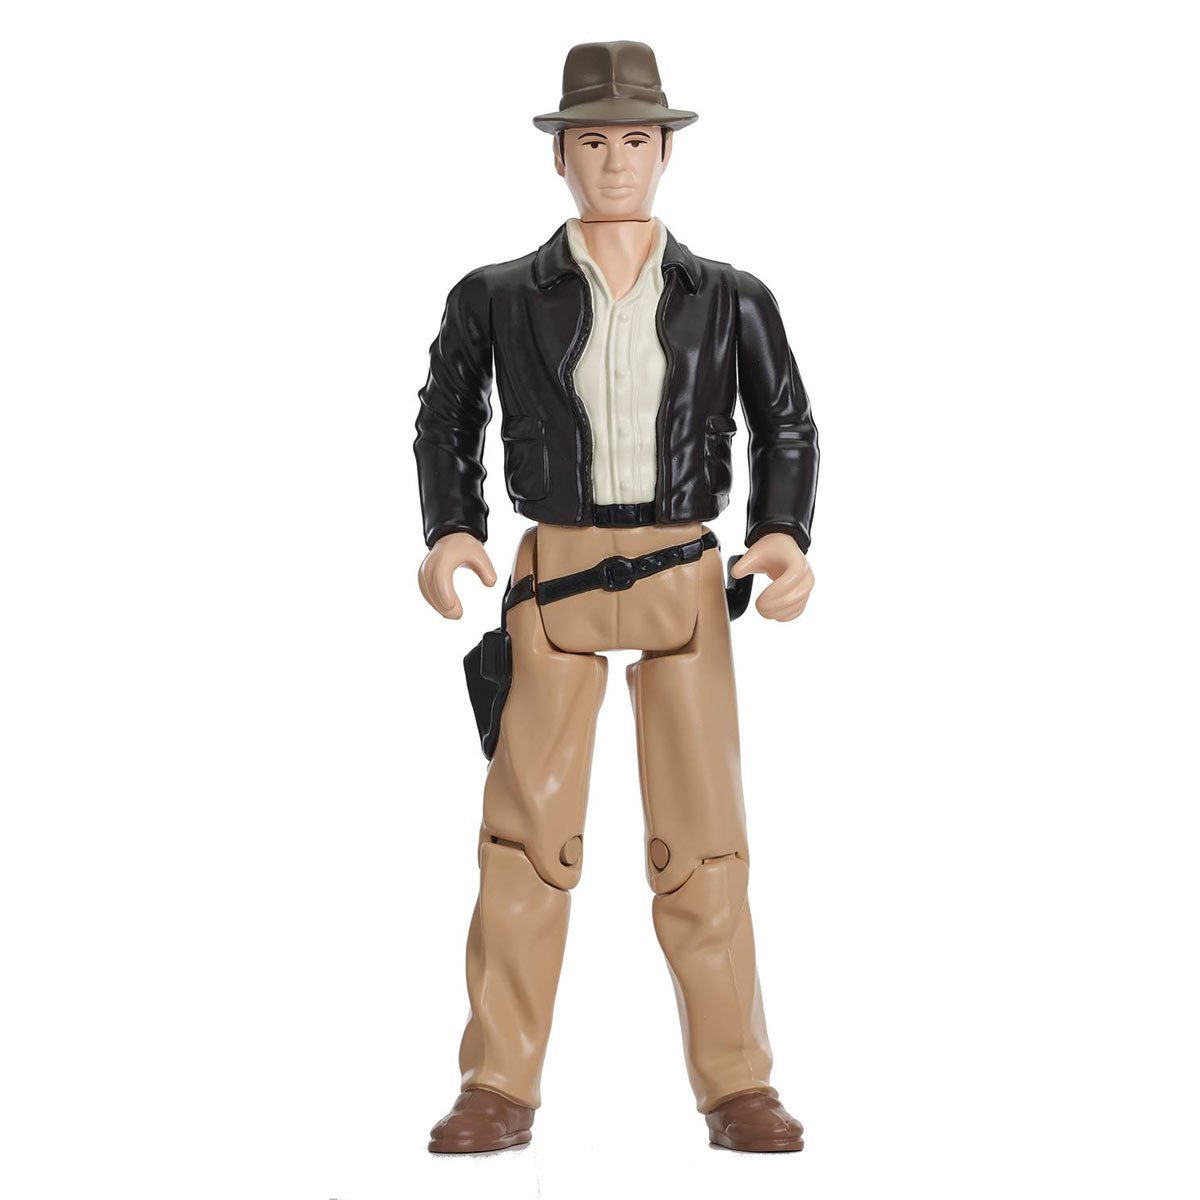 DIAMOND SELECT Indiana Jones and the Raiders of the Lost Ark Indiana Jones 12-Inch Jumbo Action Figure